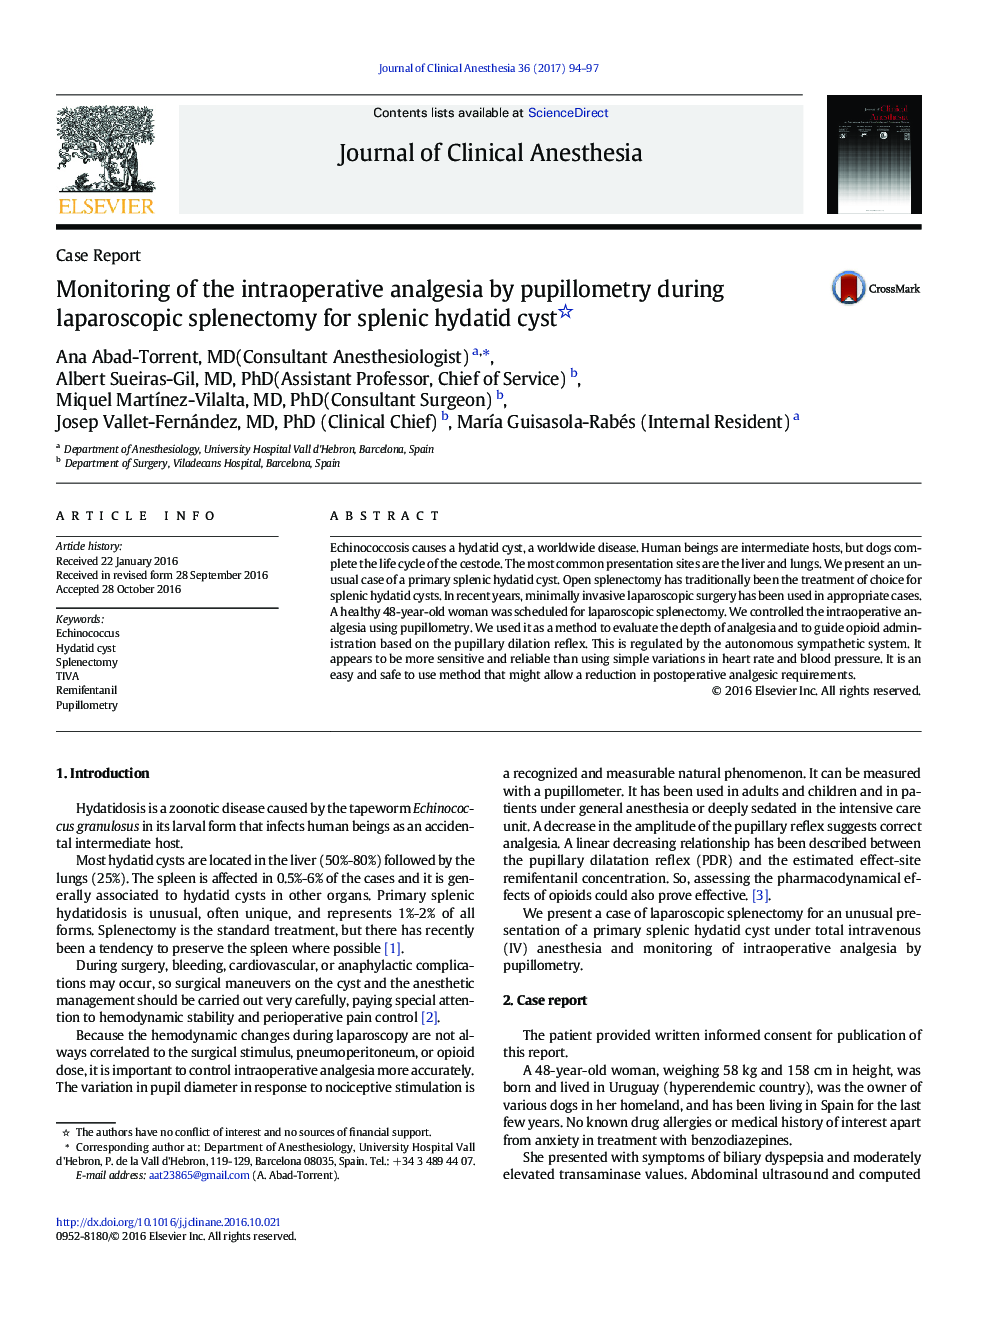 Case ReportMonitoring of the intraoperative analgesia by pupillometry during laparoscopic splenectomy for splenic hydatid cyst